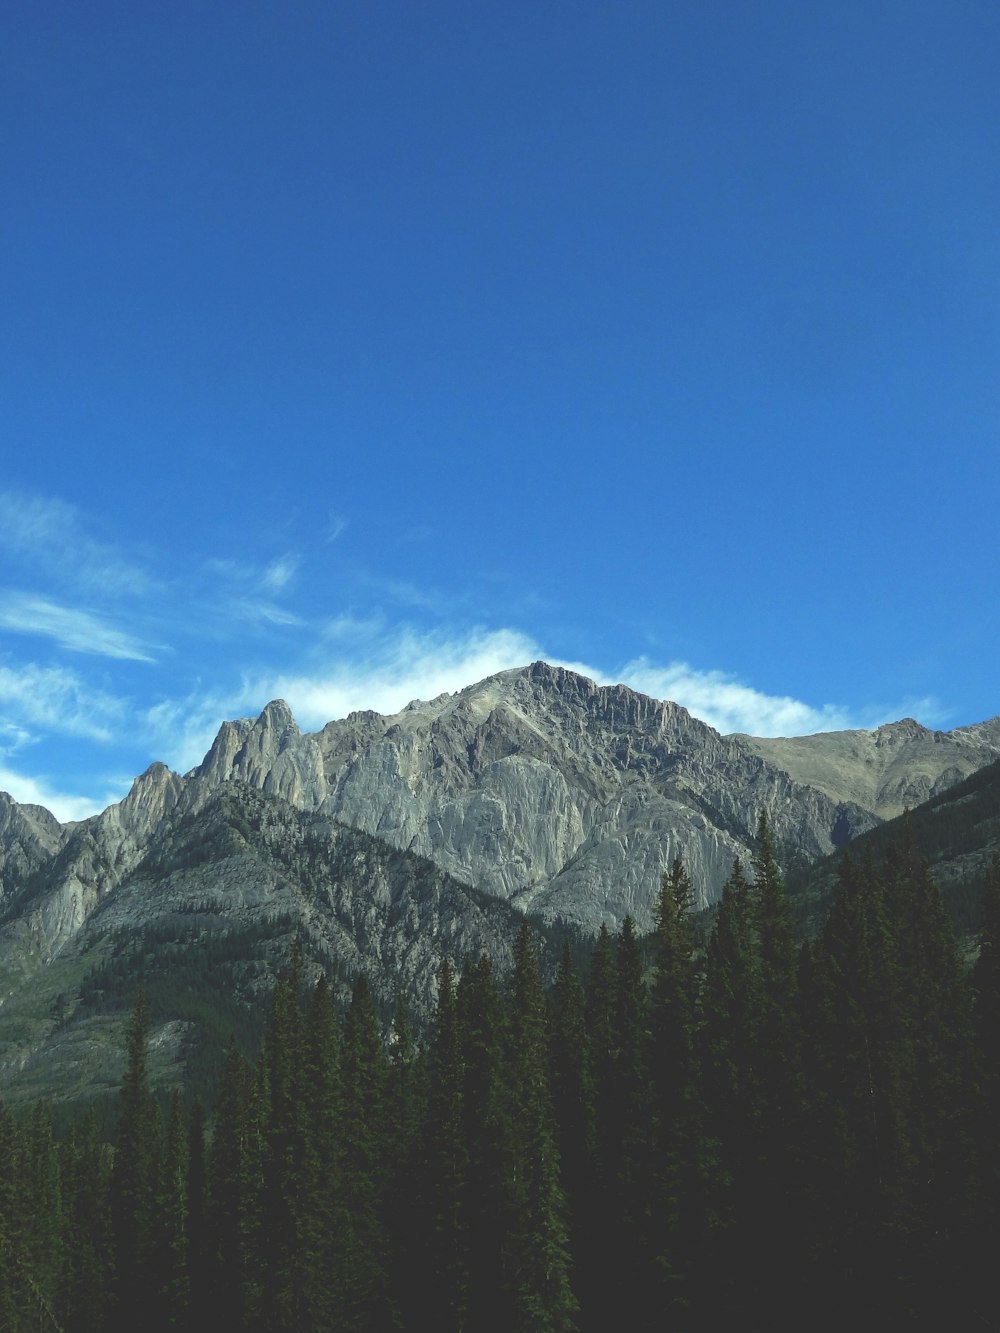 gray mountain scenery during daytime